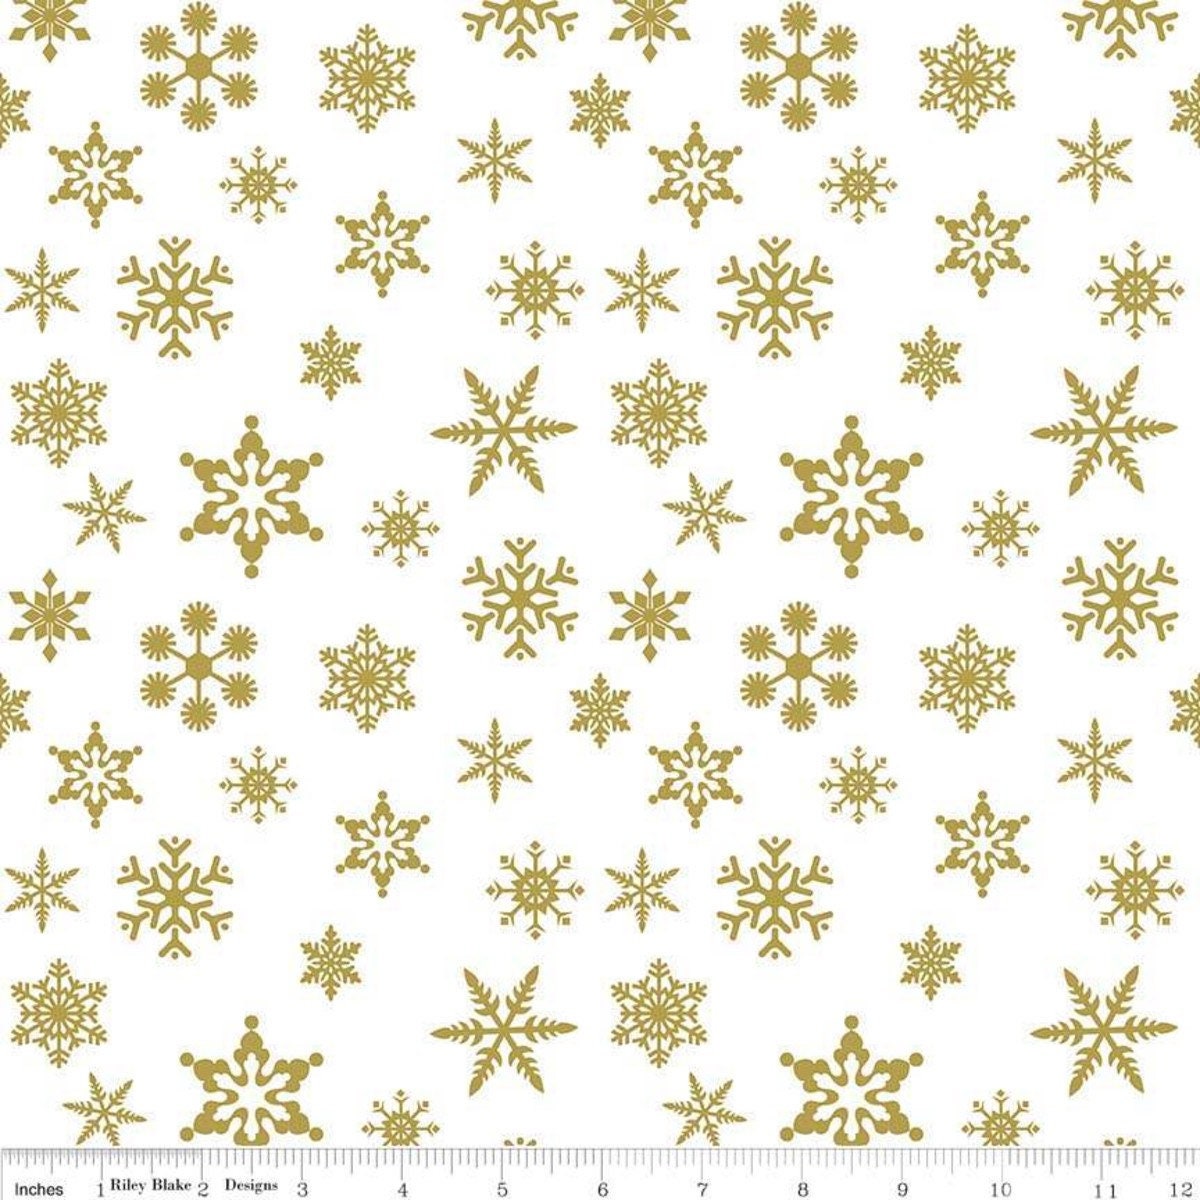 Riley Blake Fabric Sparkle Snowflake Fabric in Gold, Holiday Cotton, Riley Blake Cotton, Snowflake Fabric, Metallic Cotton, nature fabric